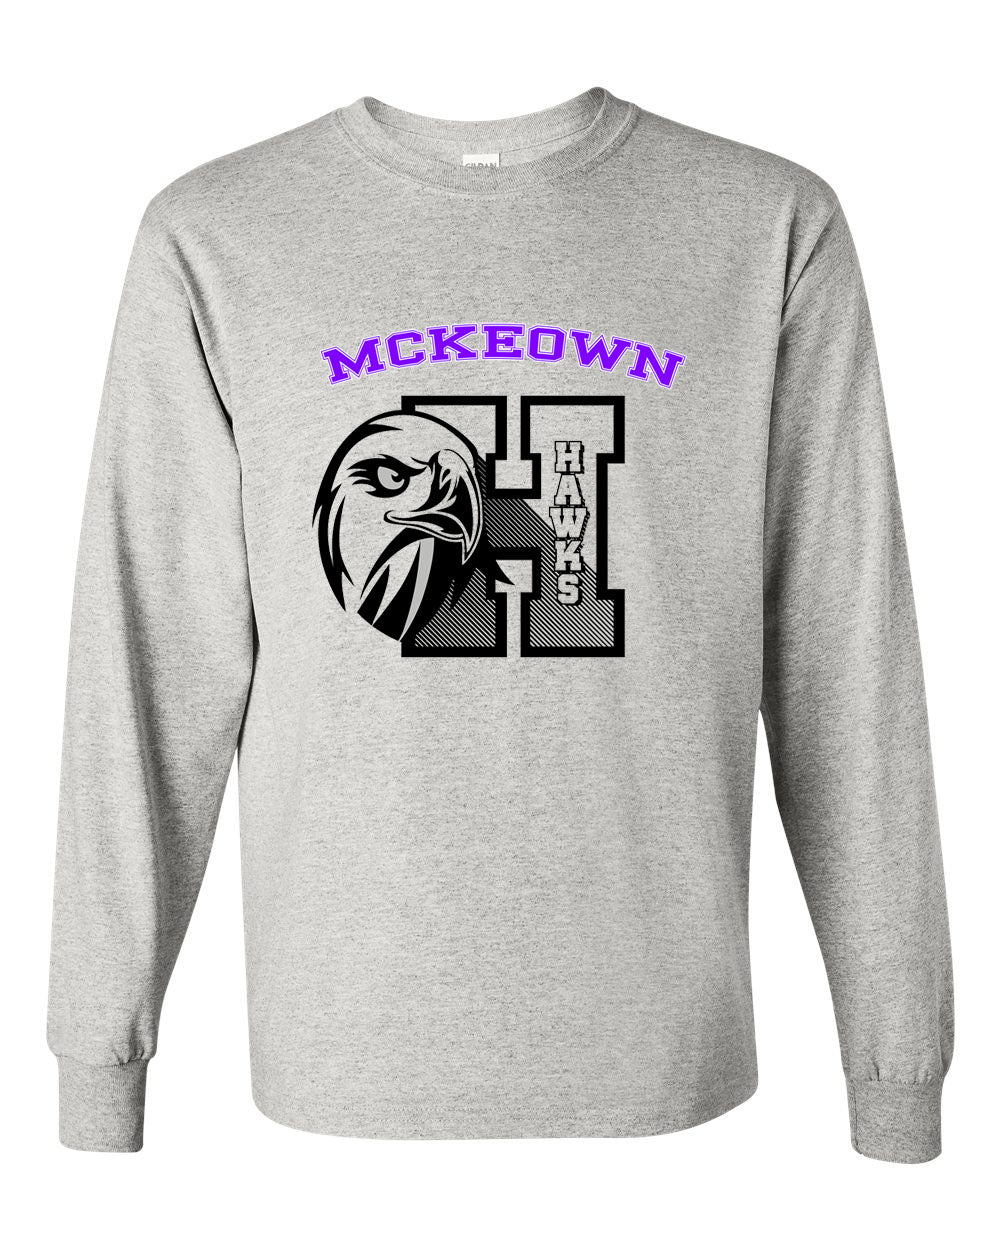 McKeown Design 10 Long Sleeve Shirt